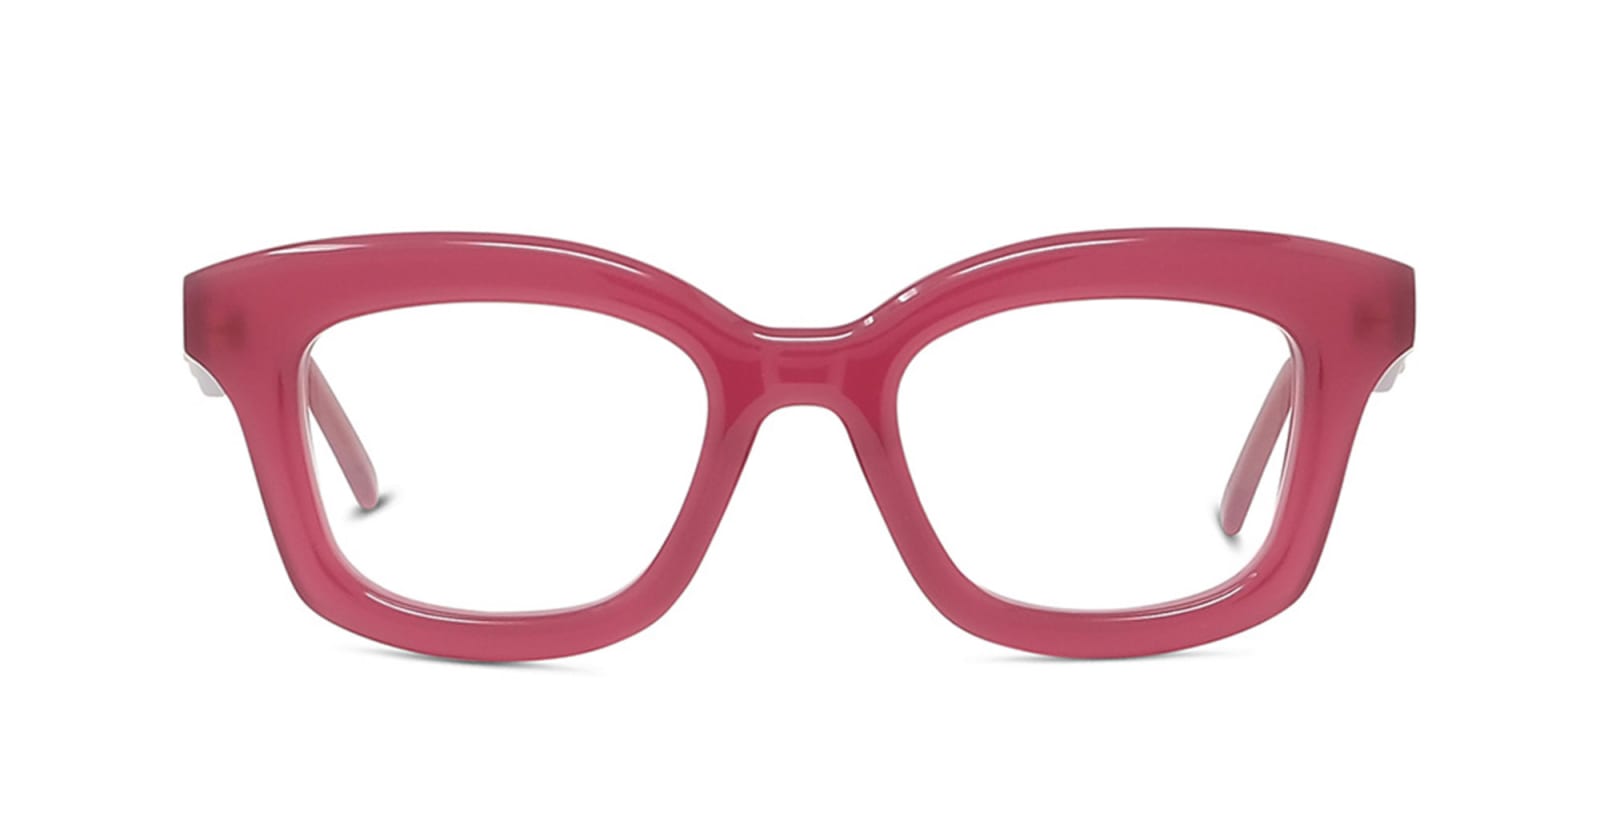 Lw50047i - Cherry Rx Glasses In Fuchsia